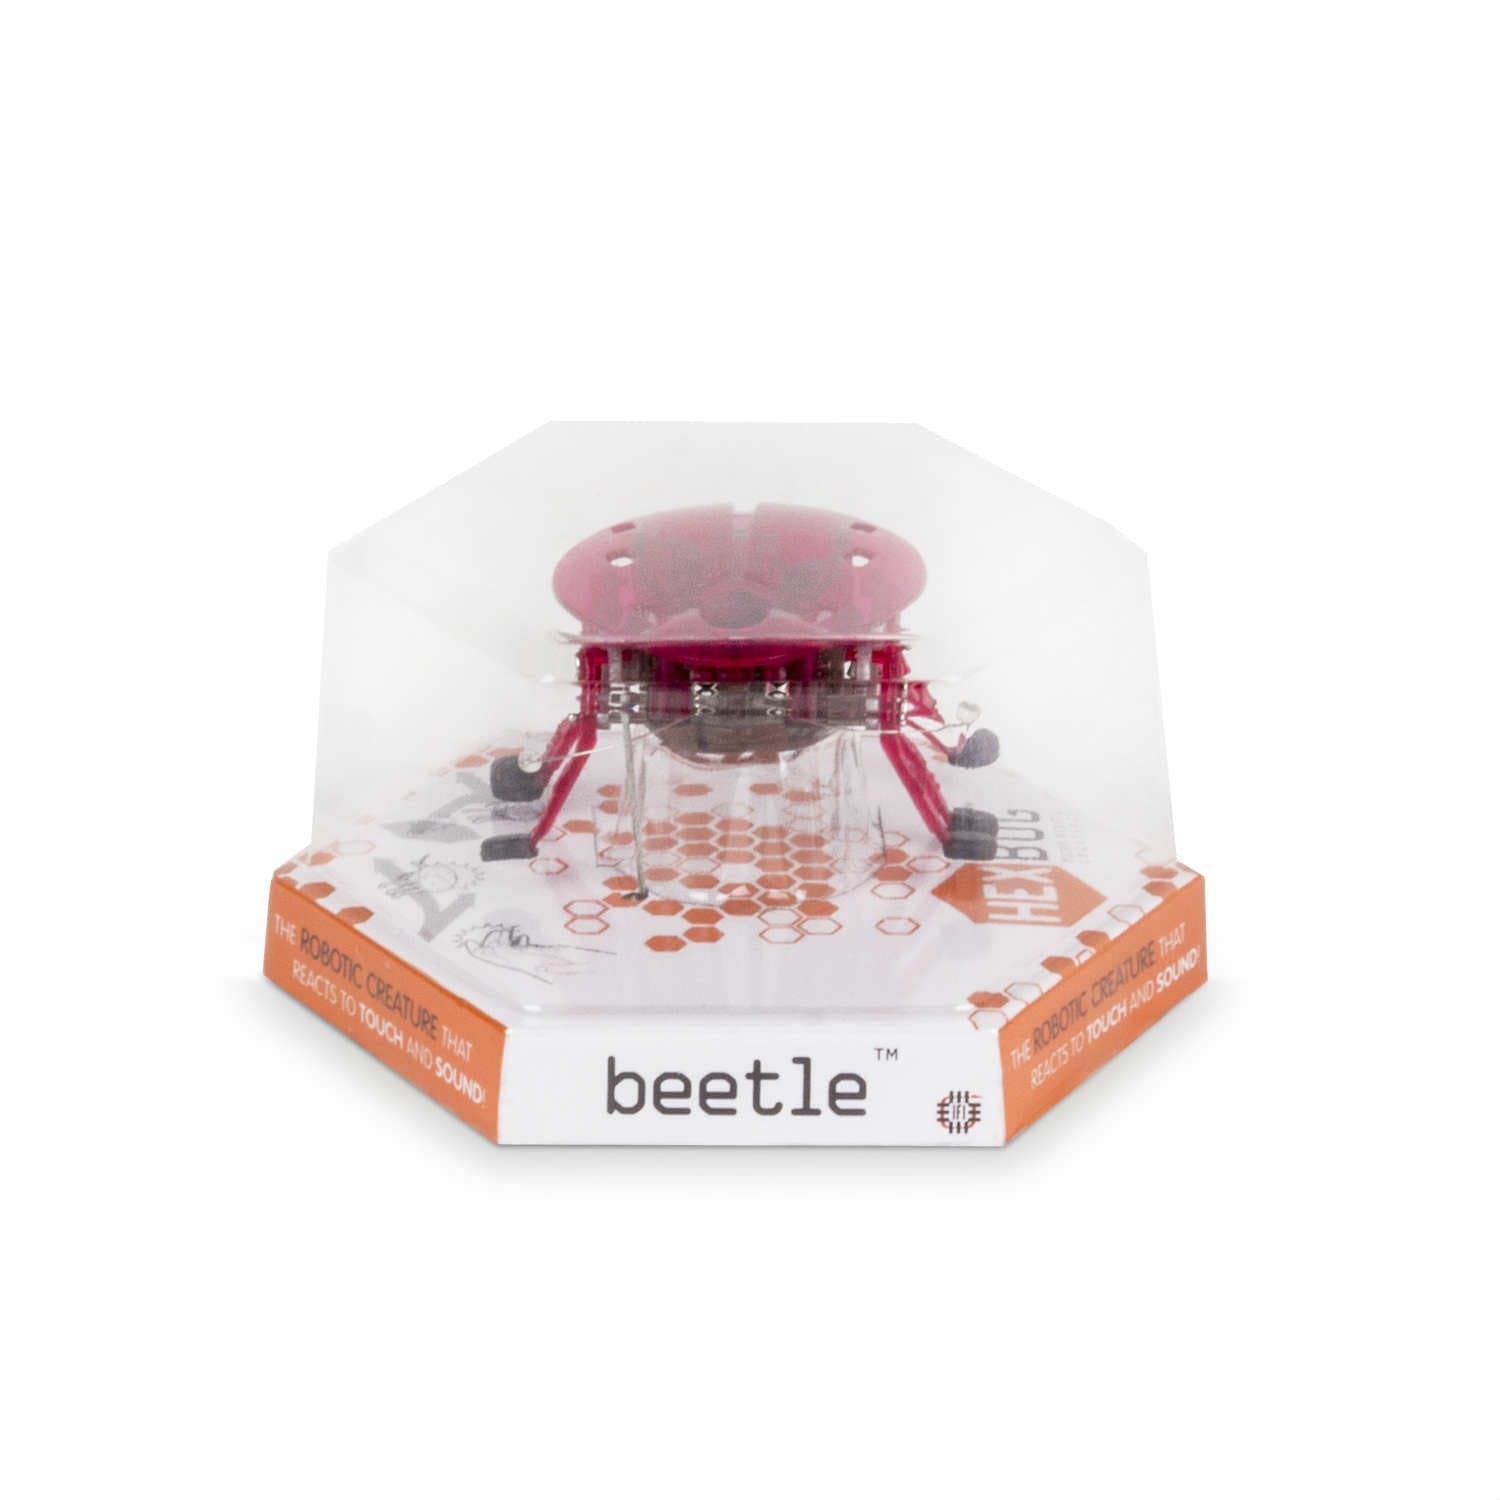 Spin Master-Hexbug Scarab Beetle -Legacy Toys